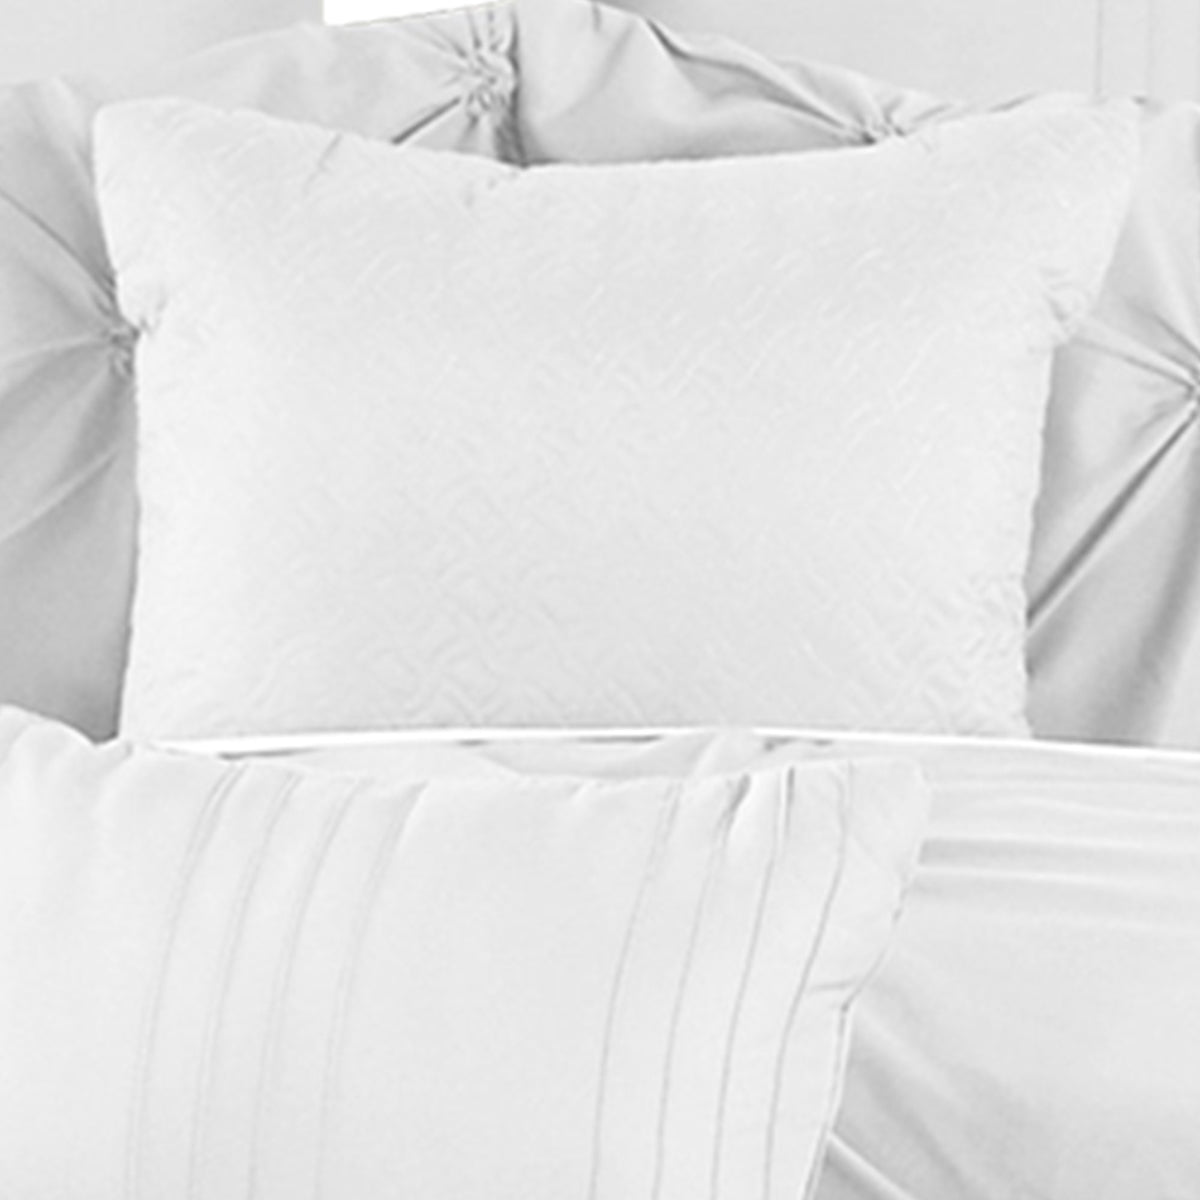 8 Piece King Polyester Comforter Set with Diamond Tufting, White - BM225185